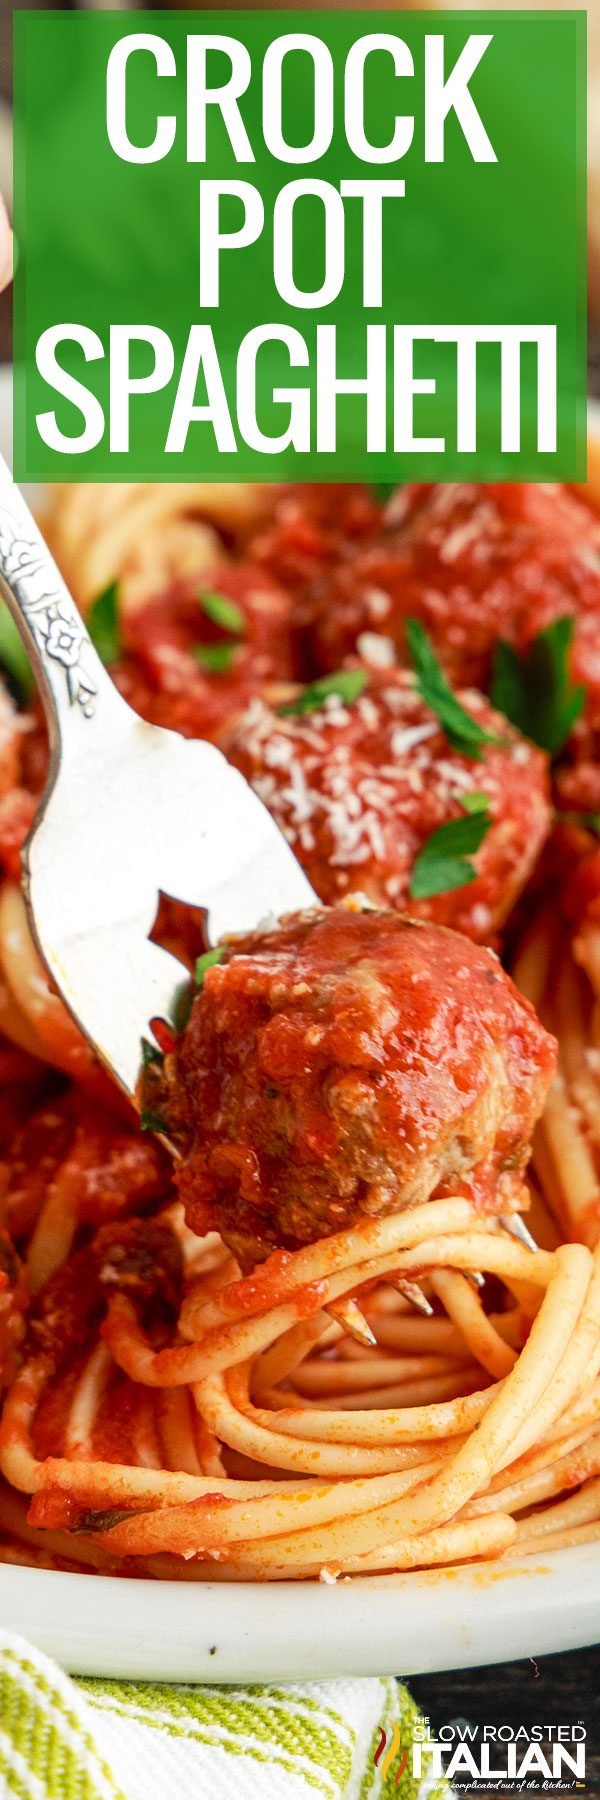 crock pot spaghetti with meatball on fork